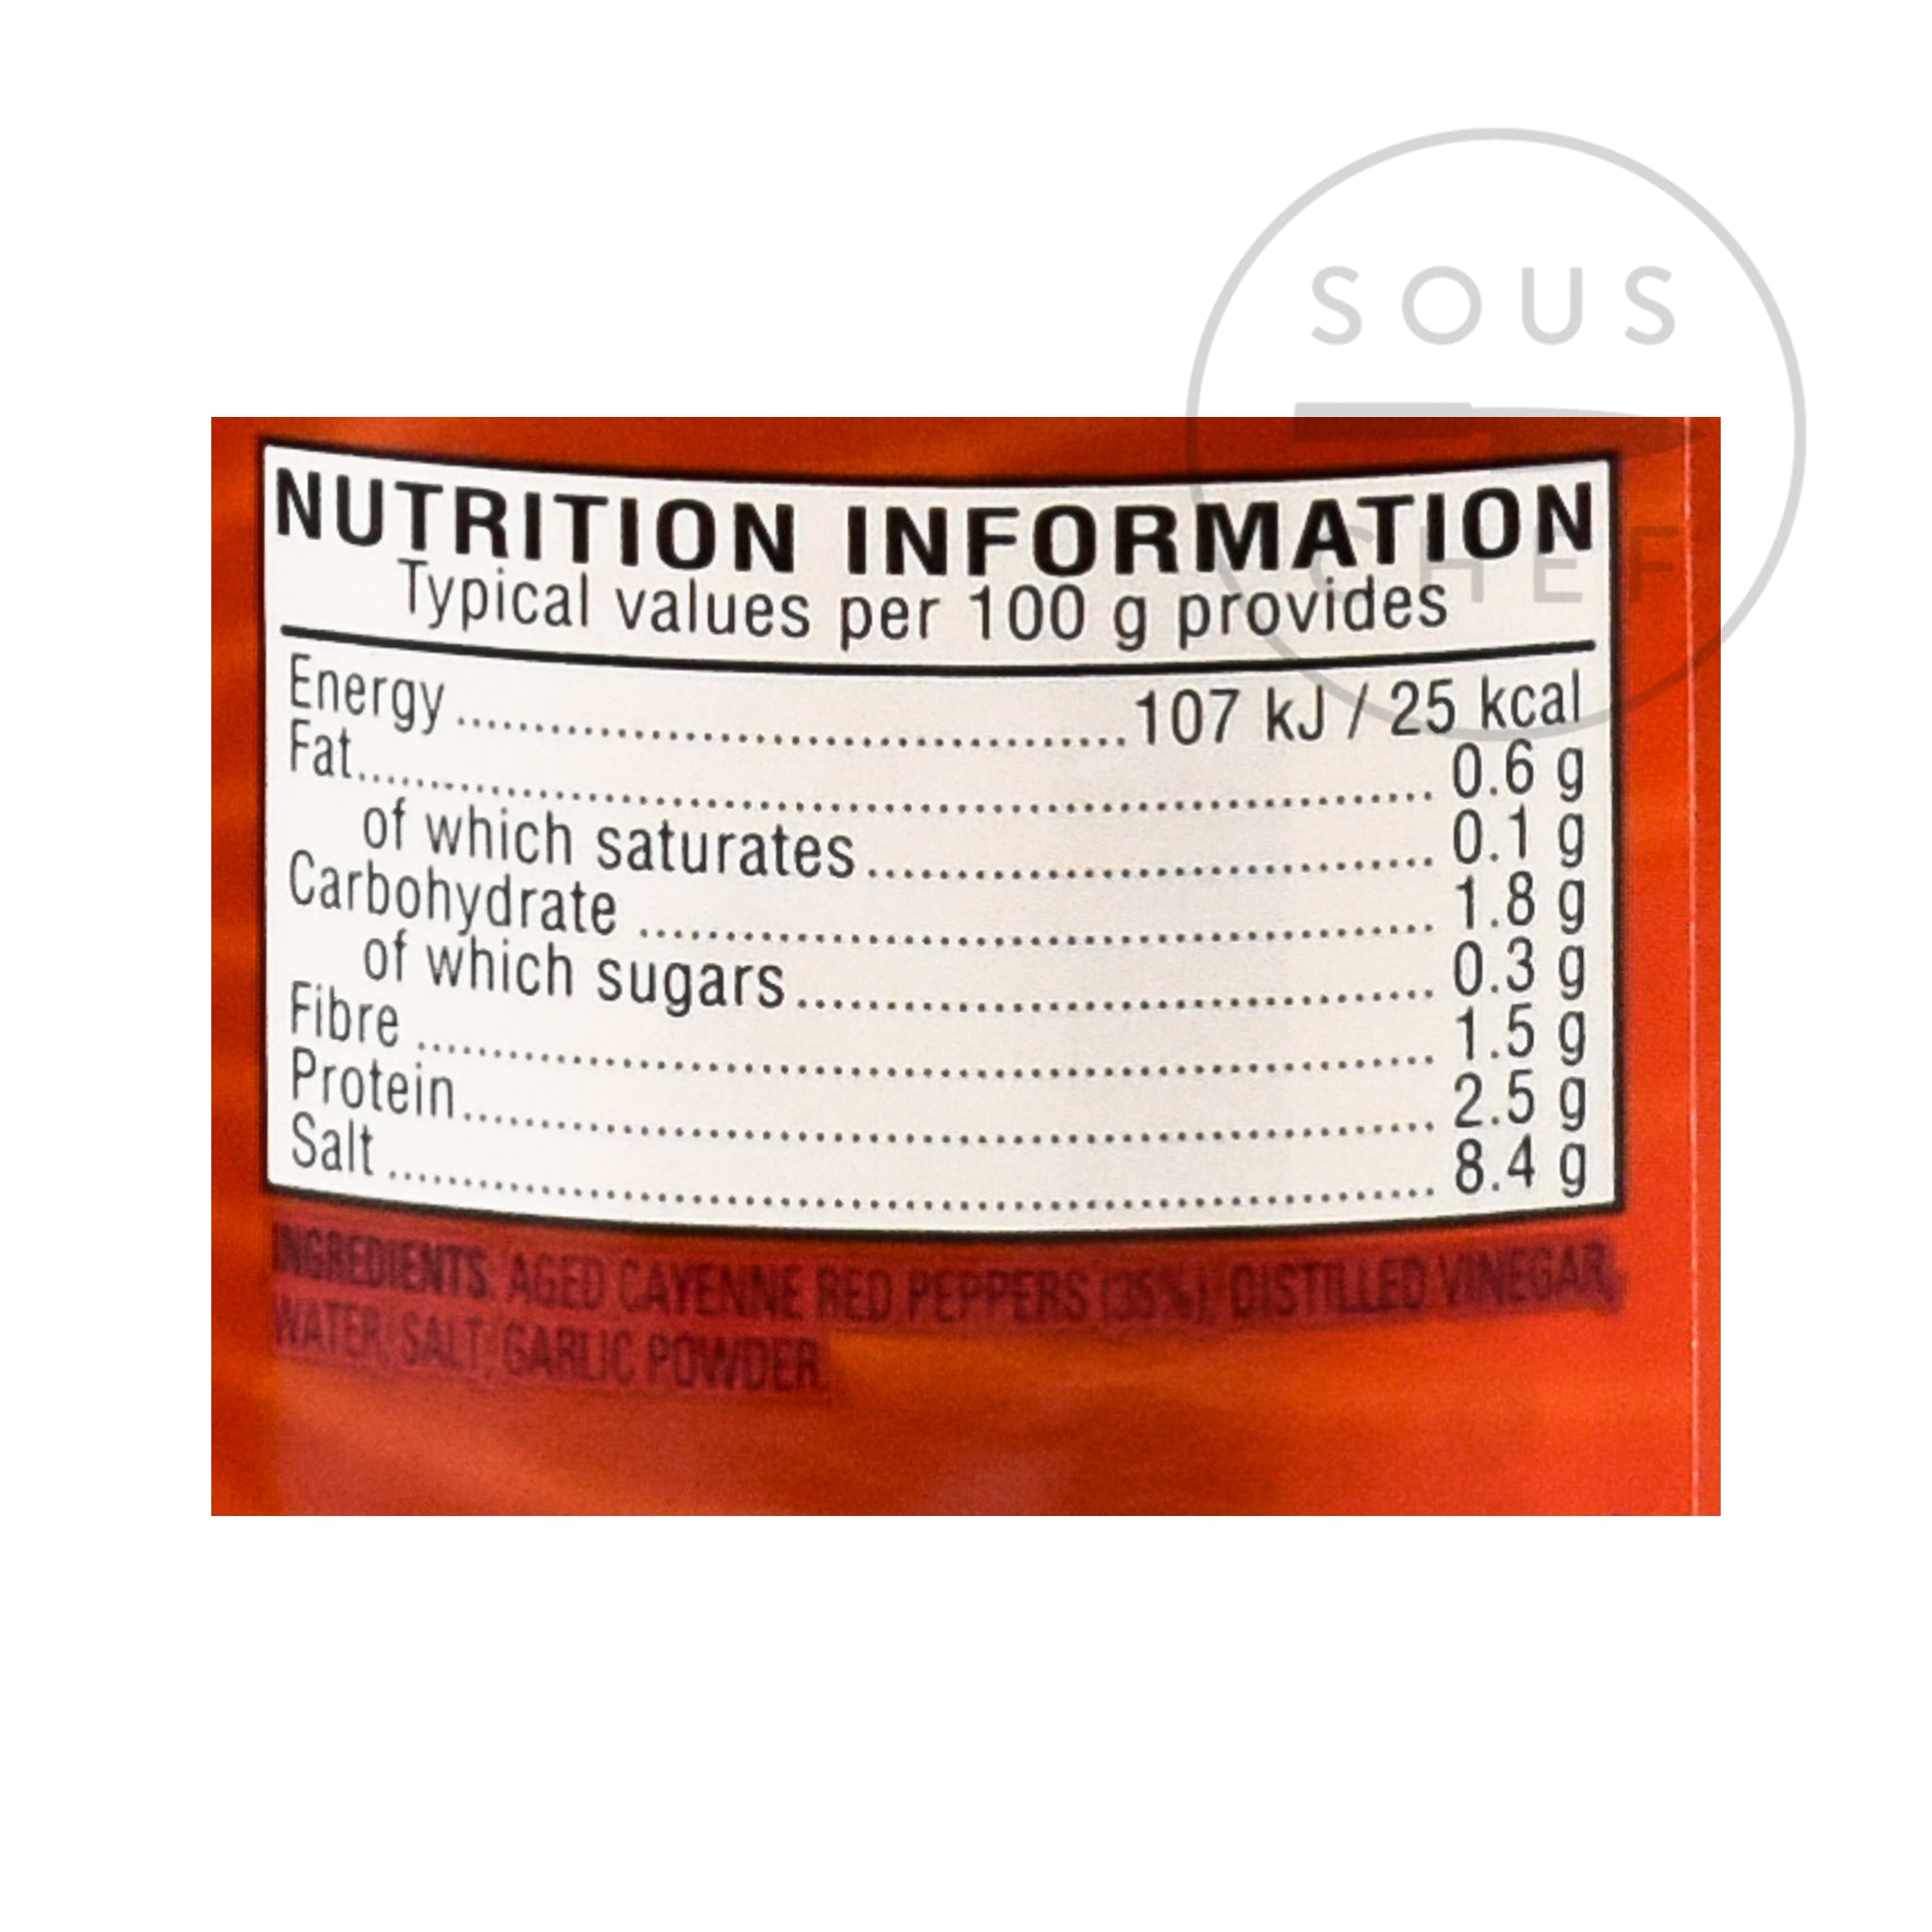 Frank's Red Hot Original Pepper Sauce 354ml nutritional information ingredients